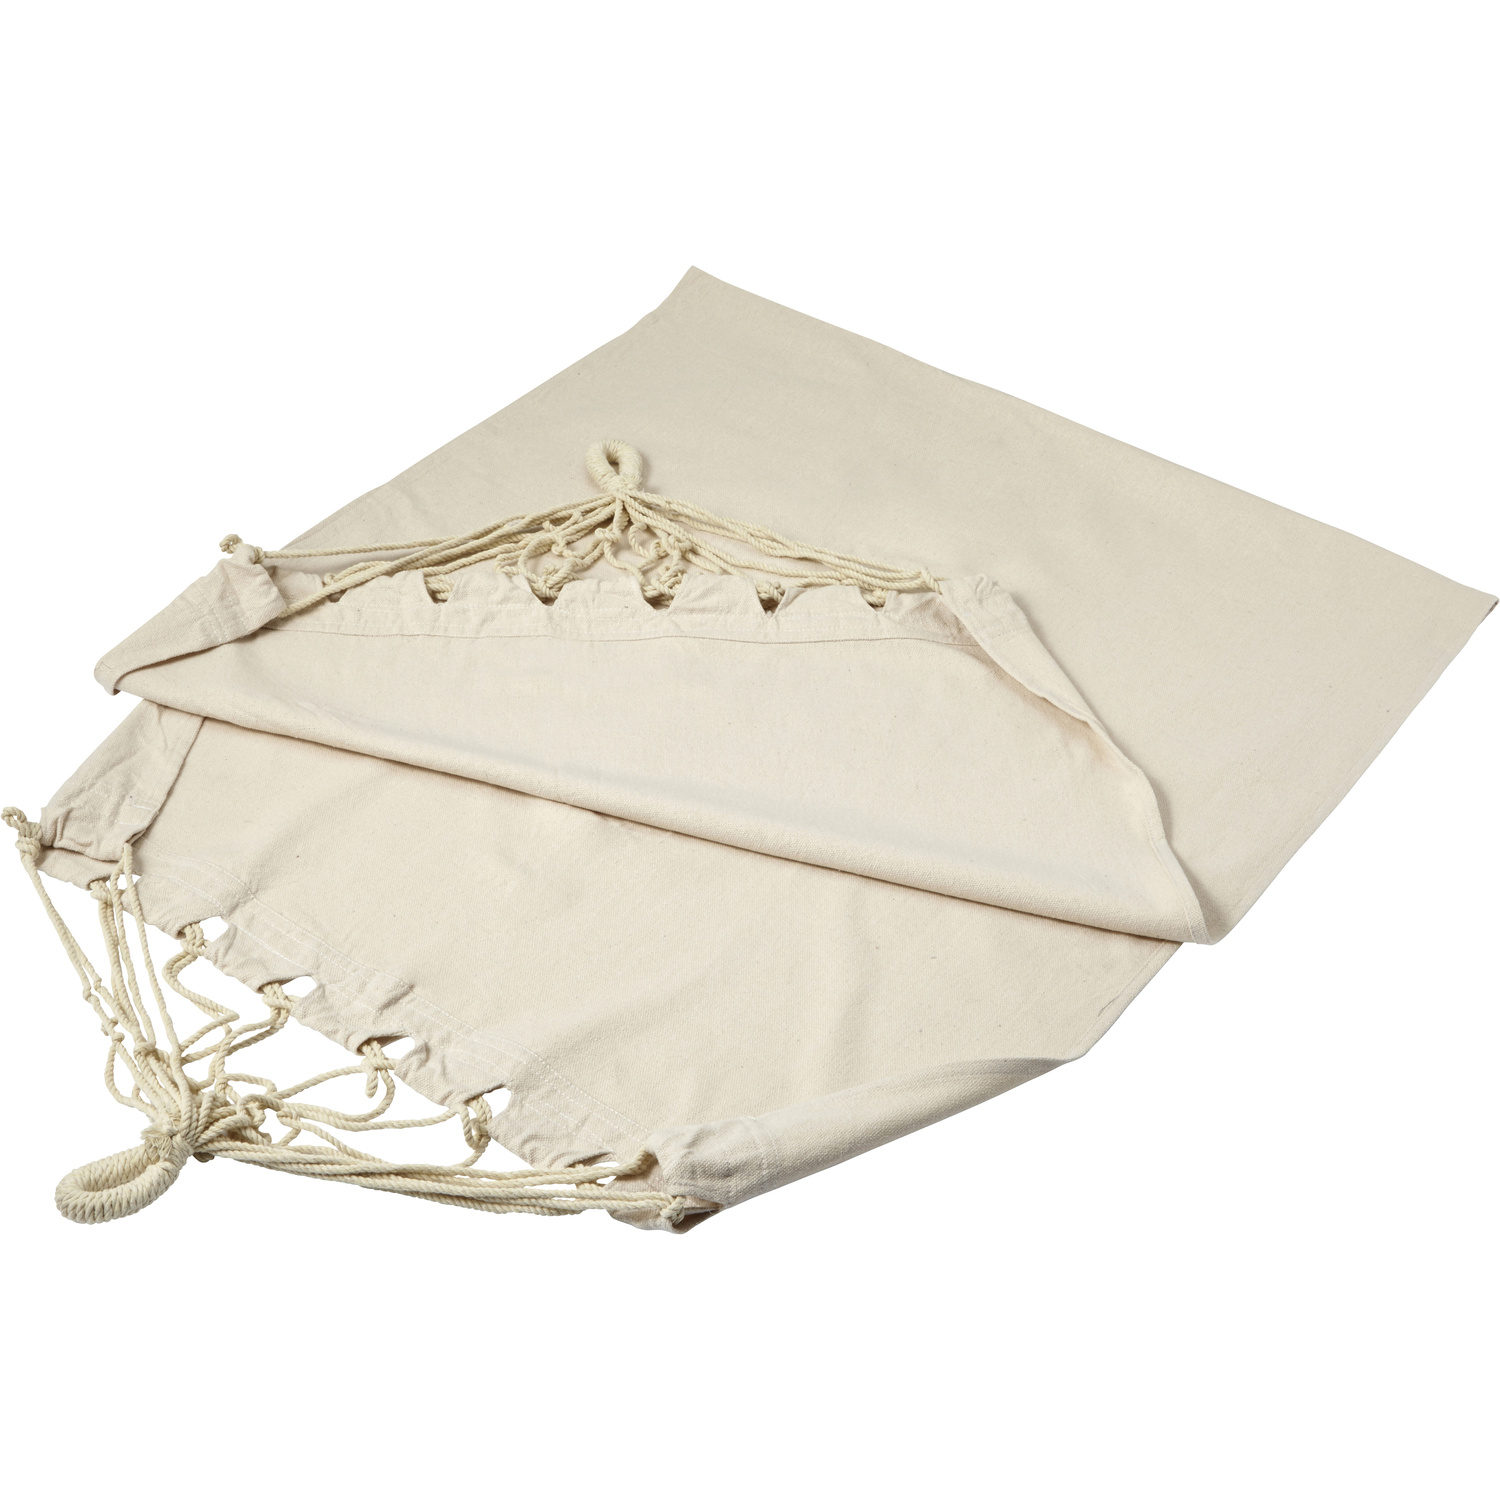 007870 013999999 3d045 rgt pro01 fal - Canvas hammock with Storage Bag